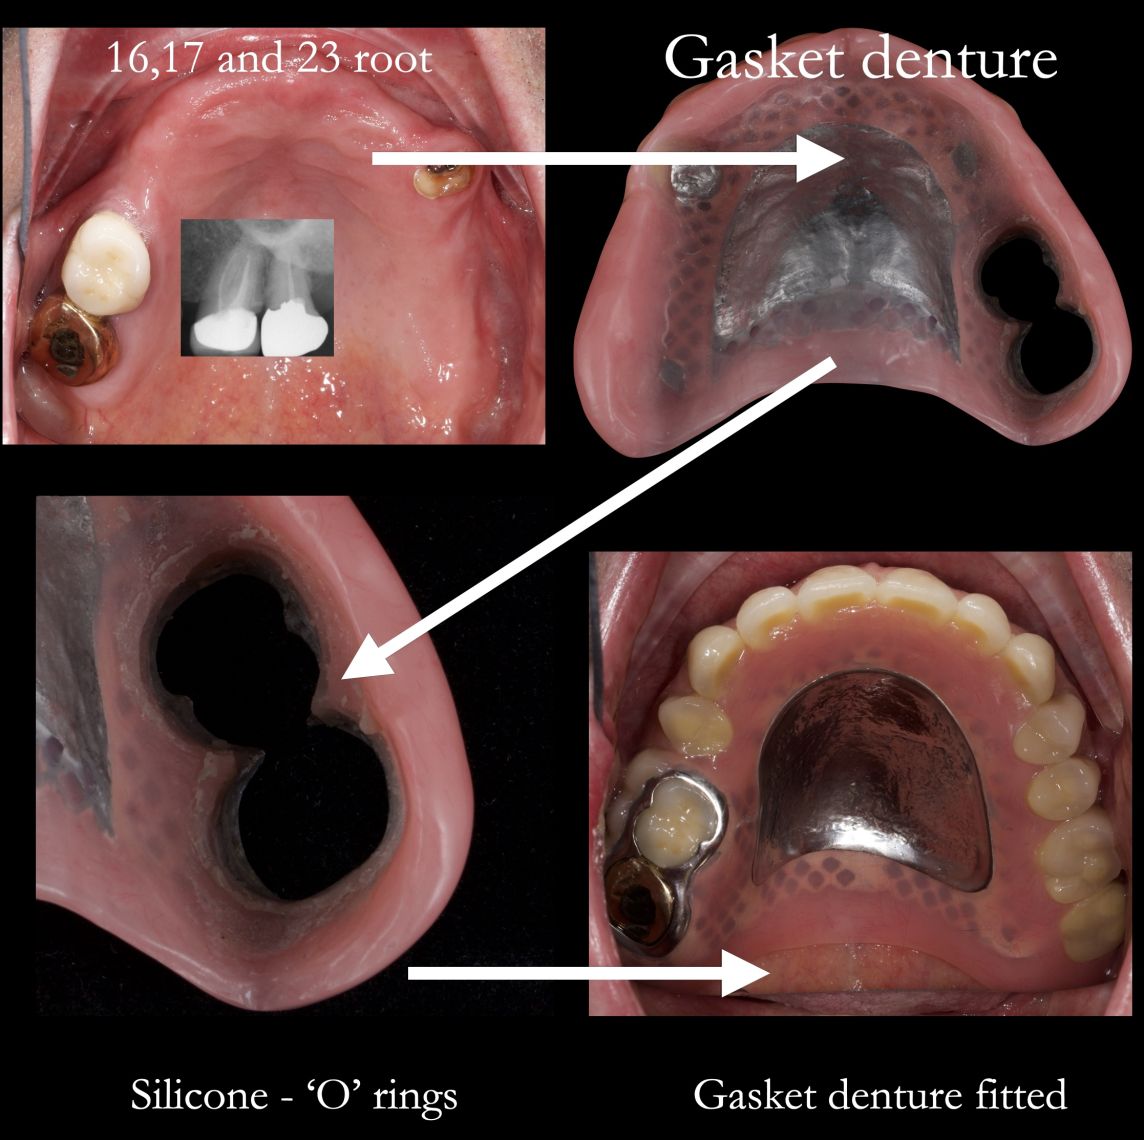 The 'Gasket' denture